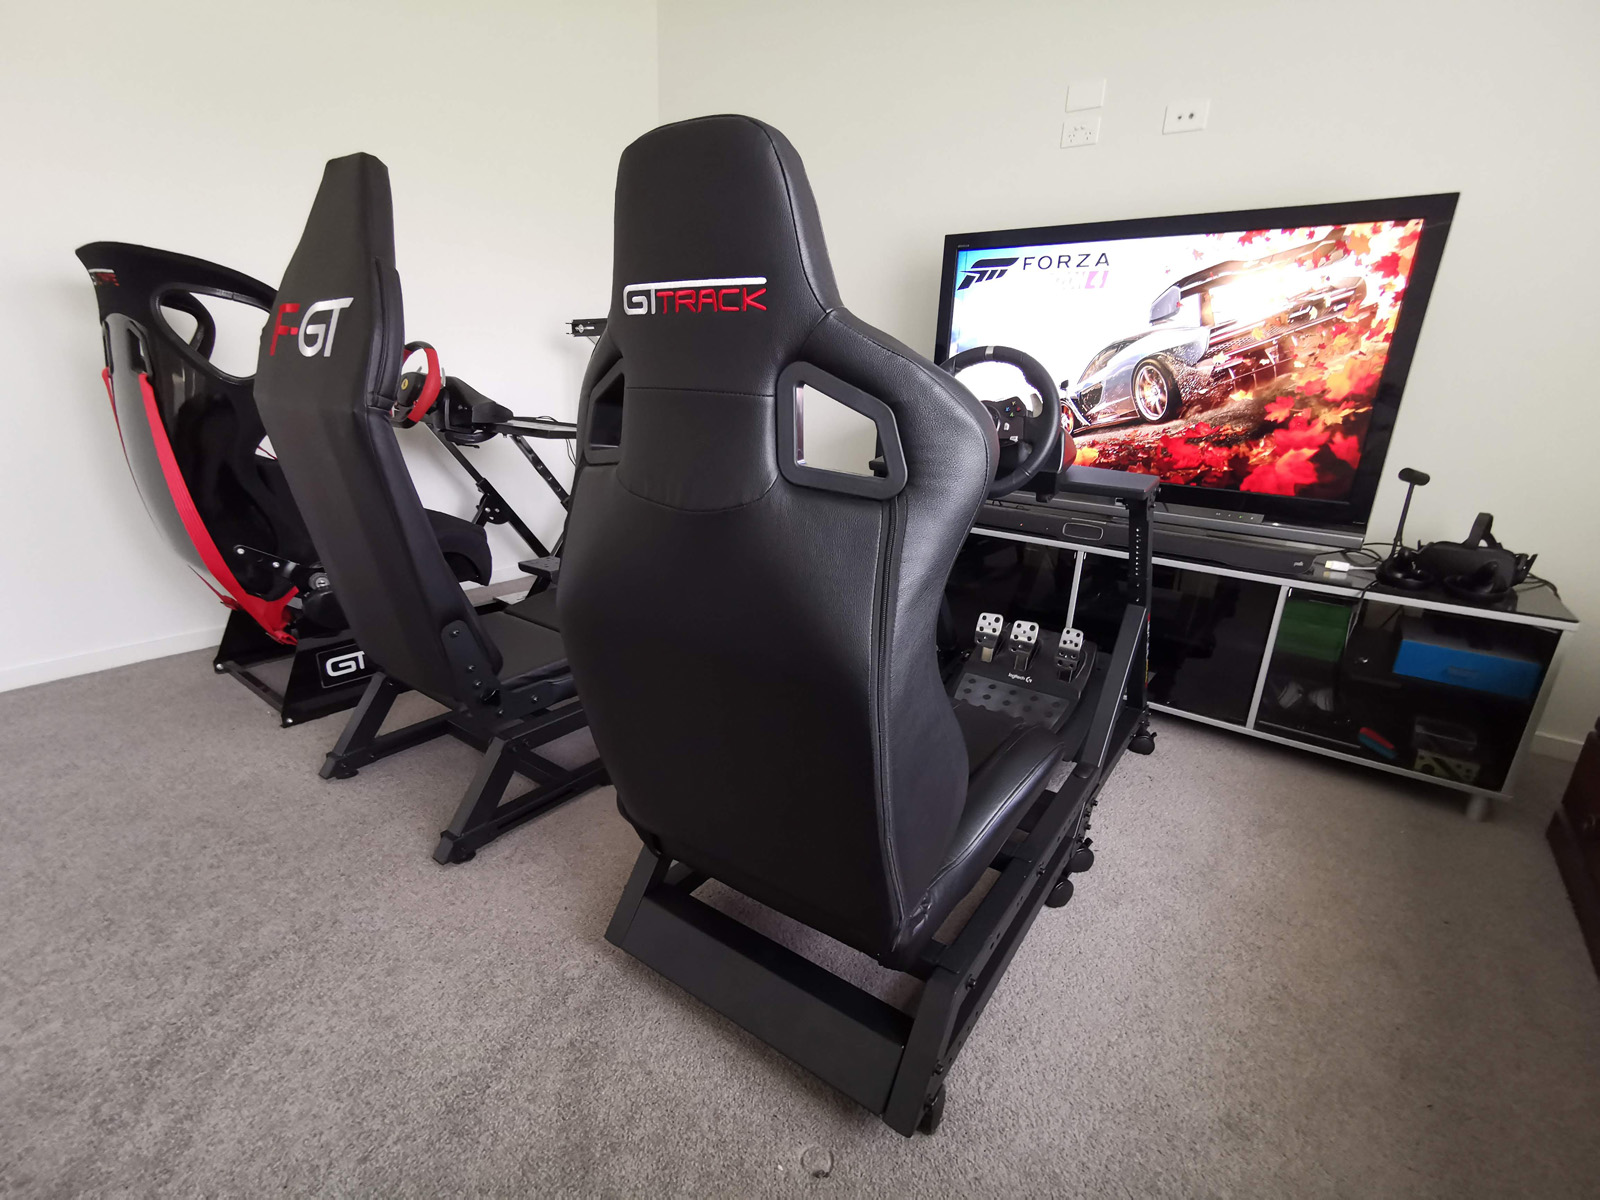 Review: Next Level Racing GTtrack racing sim - techAU